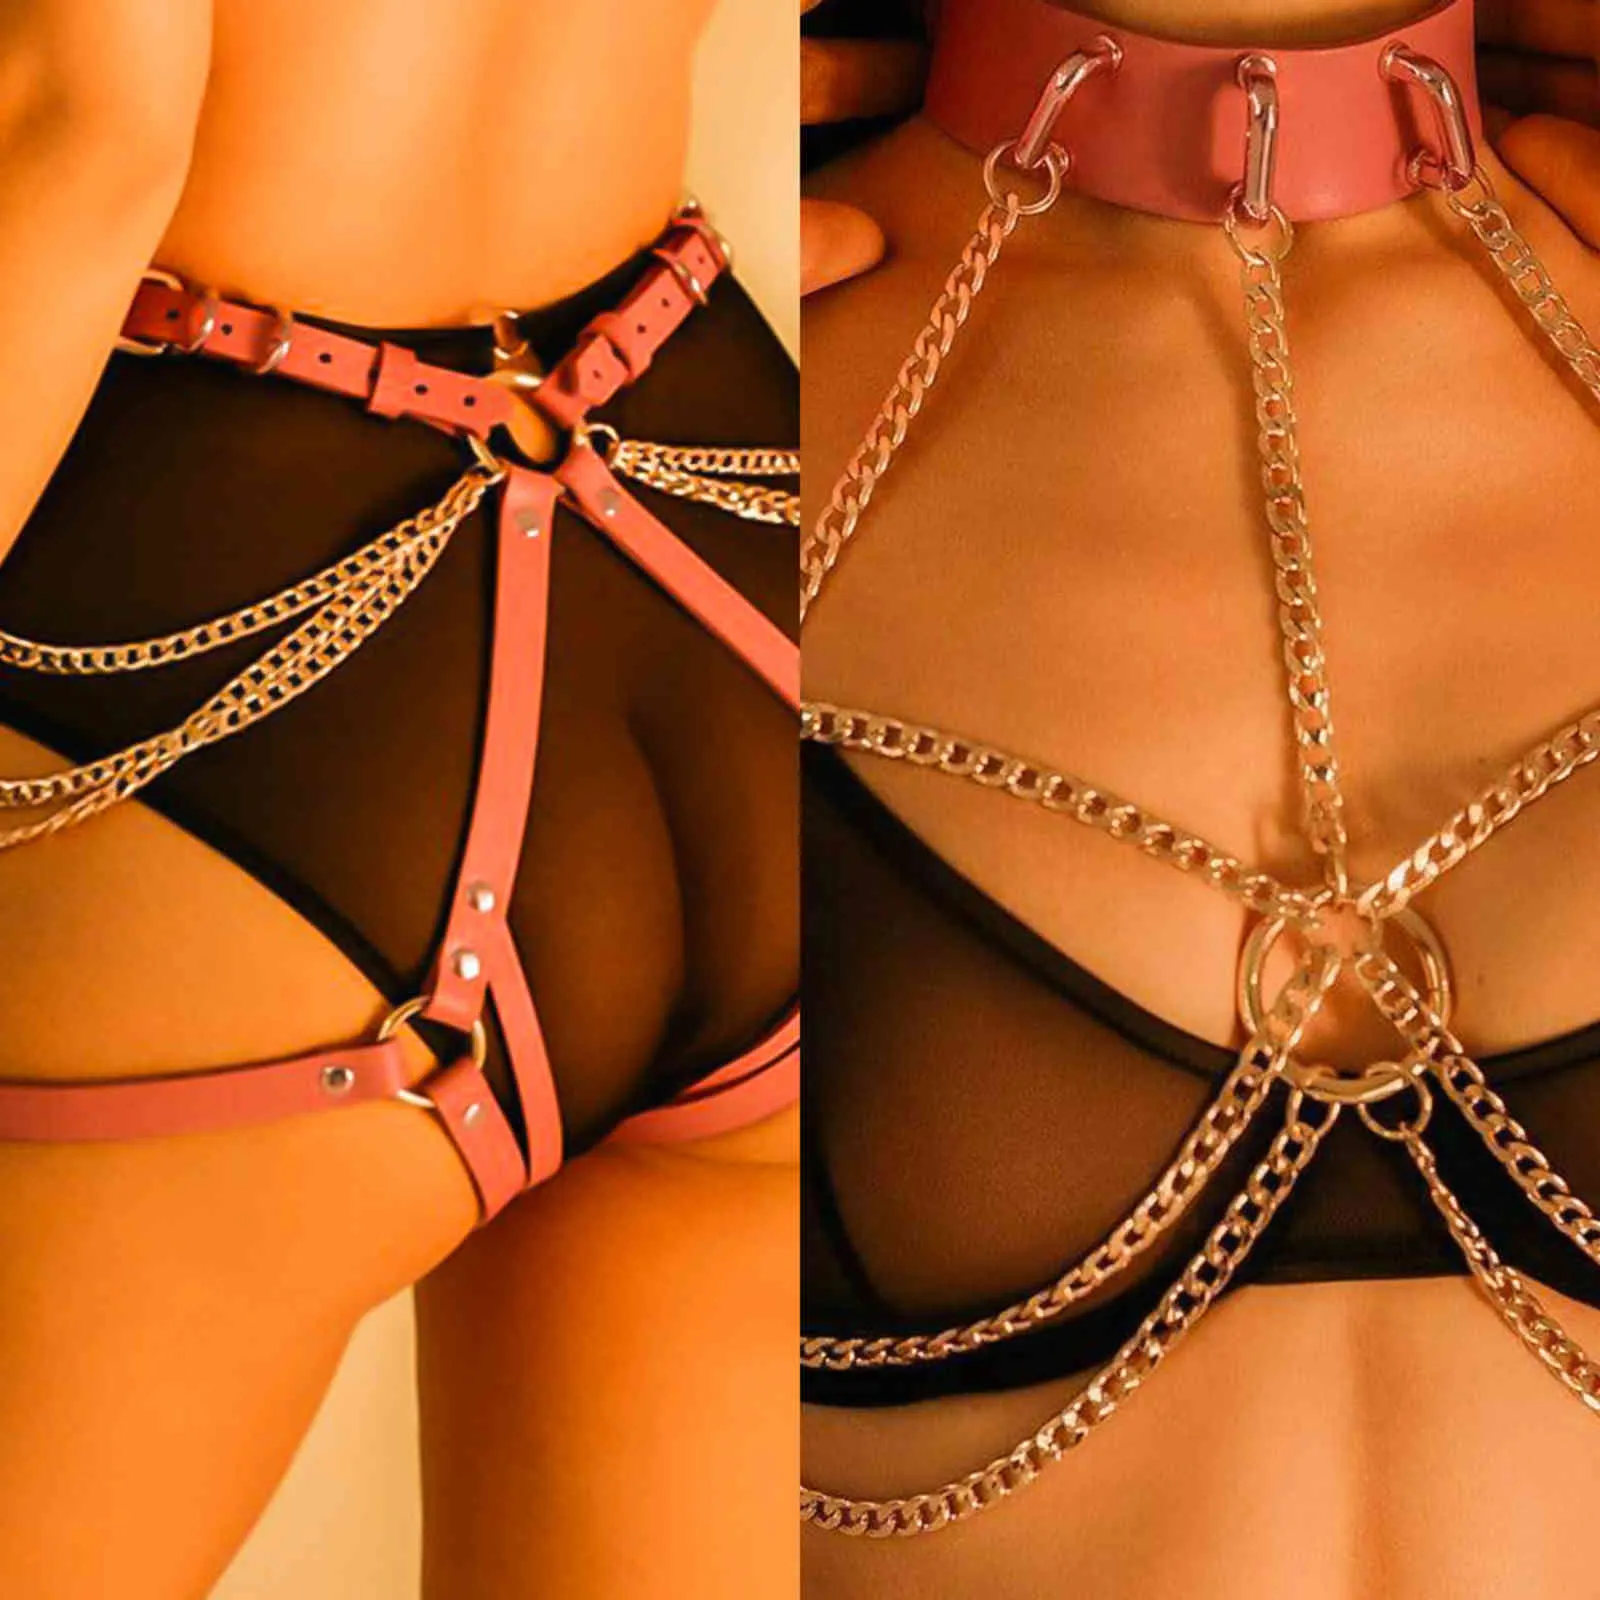 Bondages Hot SM Sex Toys For Woman Couples Bondage Gear Erotic Gold Chain Leather Fetish Belt Sexy Bdsm Lingerie Adult Products 1122